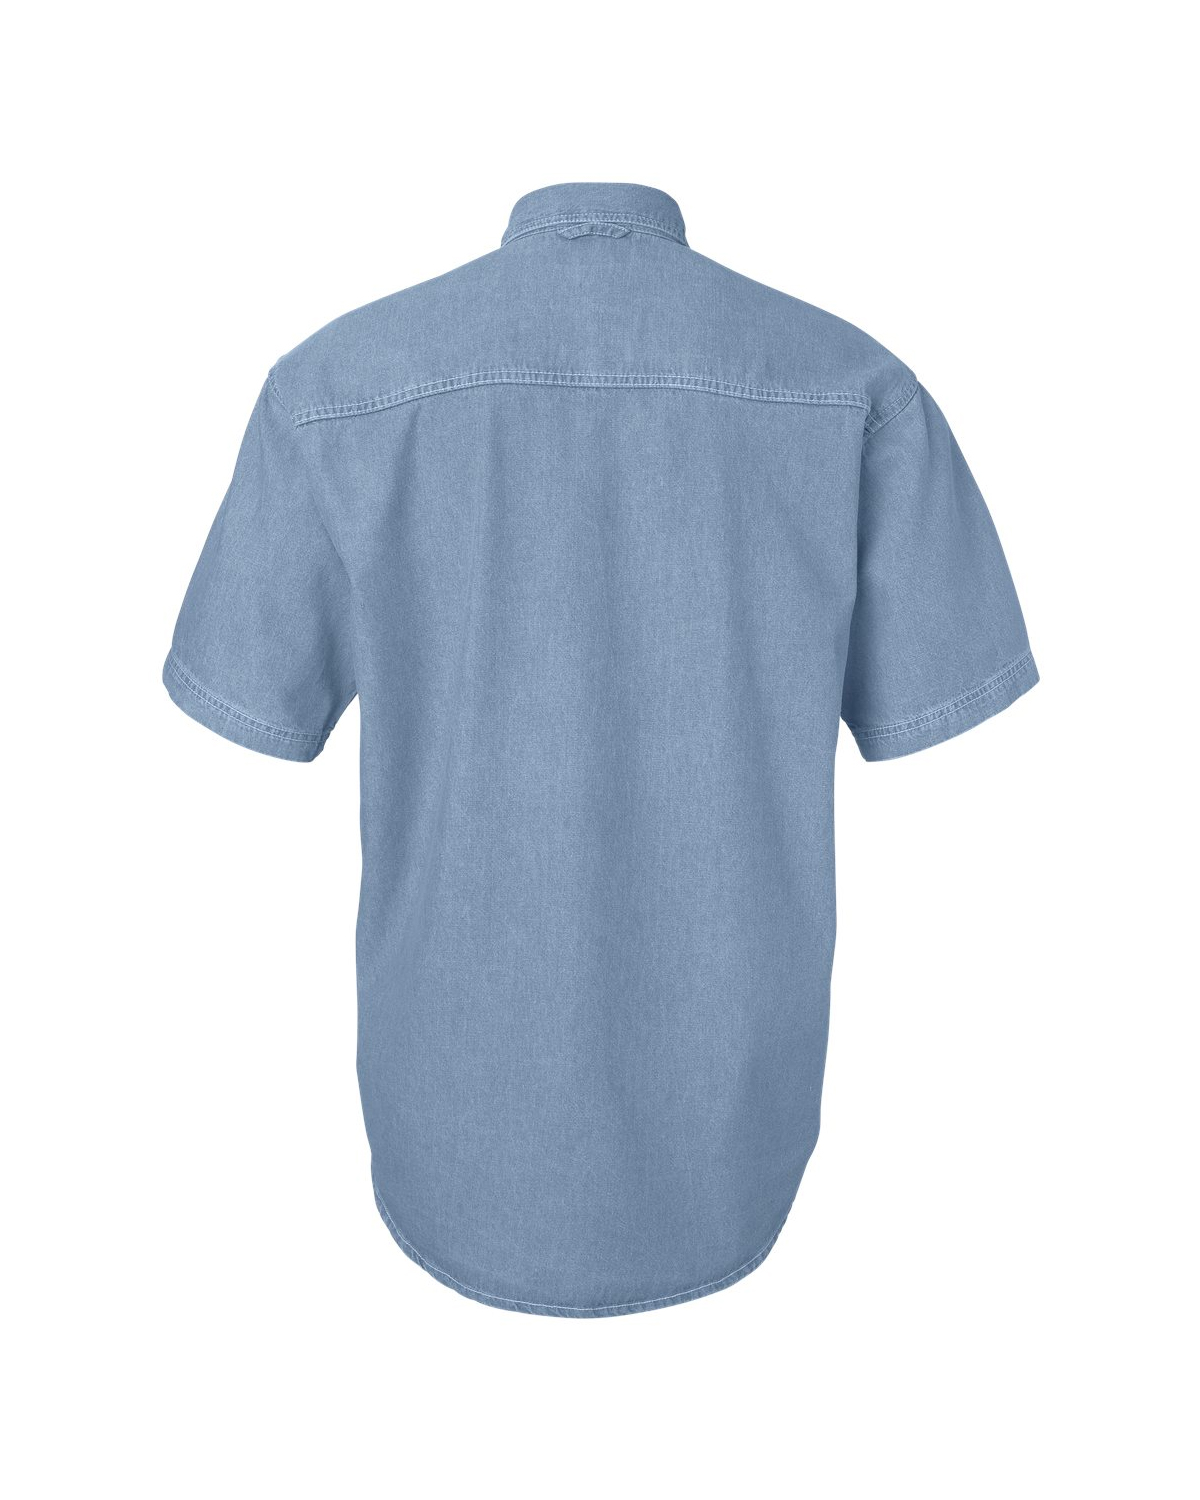 Sierra Pacific 0211 Short Sleeve Denim Shirt-Veetrends.com